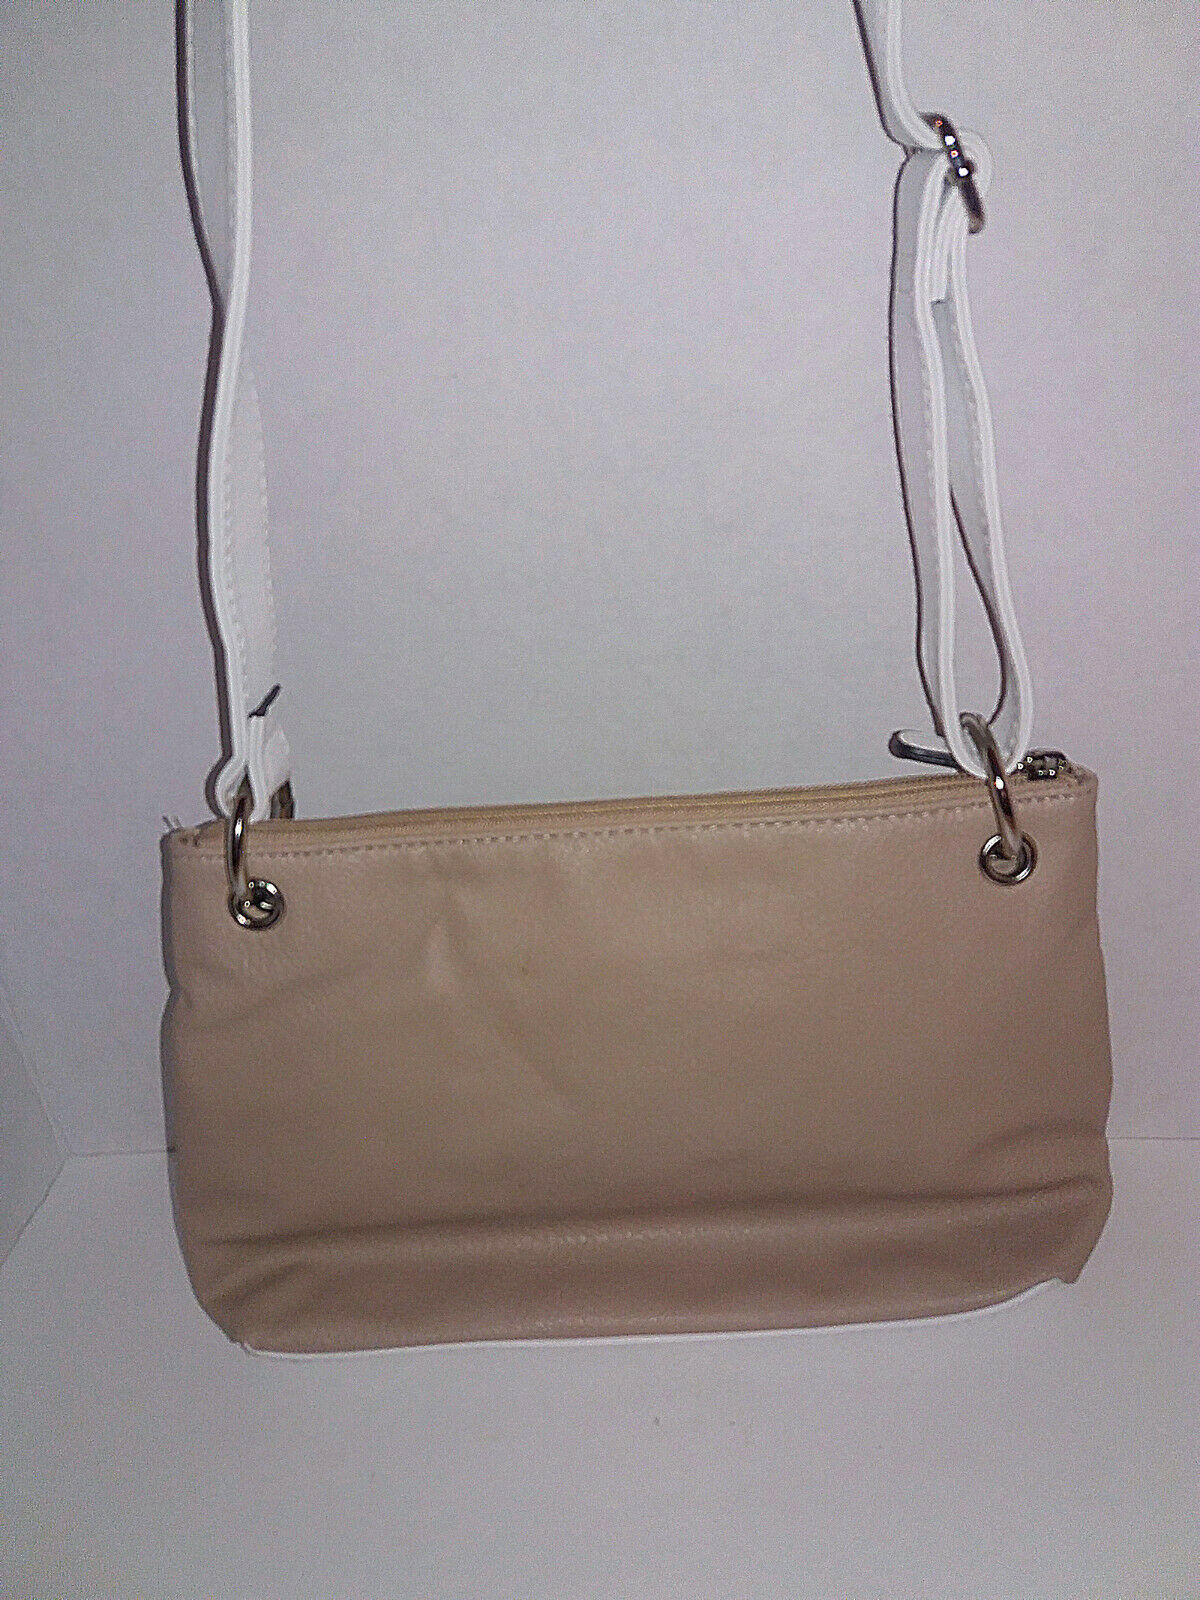 Rosetti Handbag White And Tan RN# 108833 Purse Pre Owned 7 X 12 Inches ...